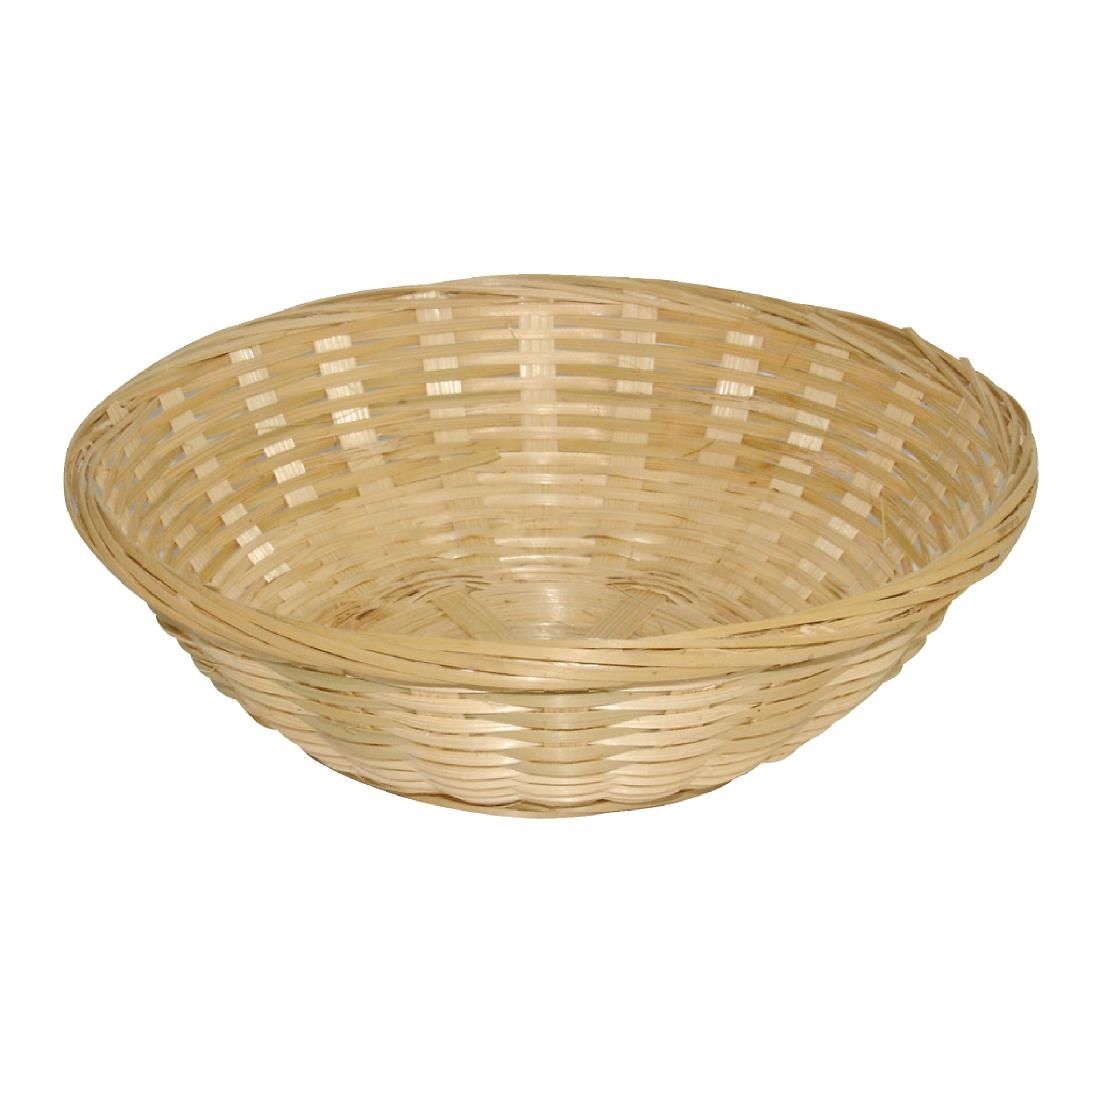 Y570 Wicker Round Bread Basket (Pack of 6)